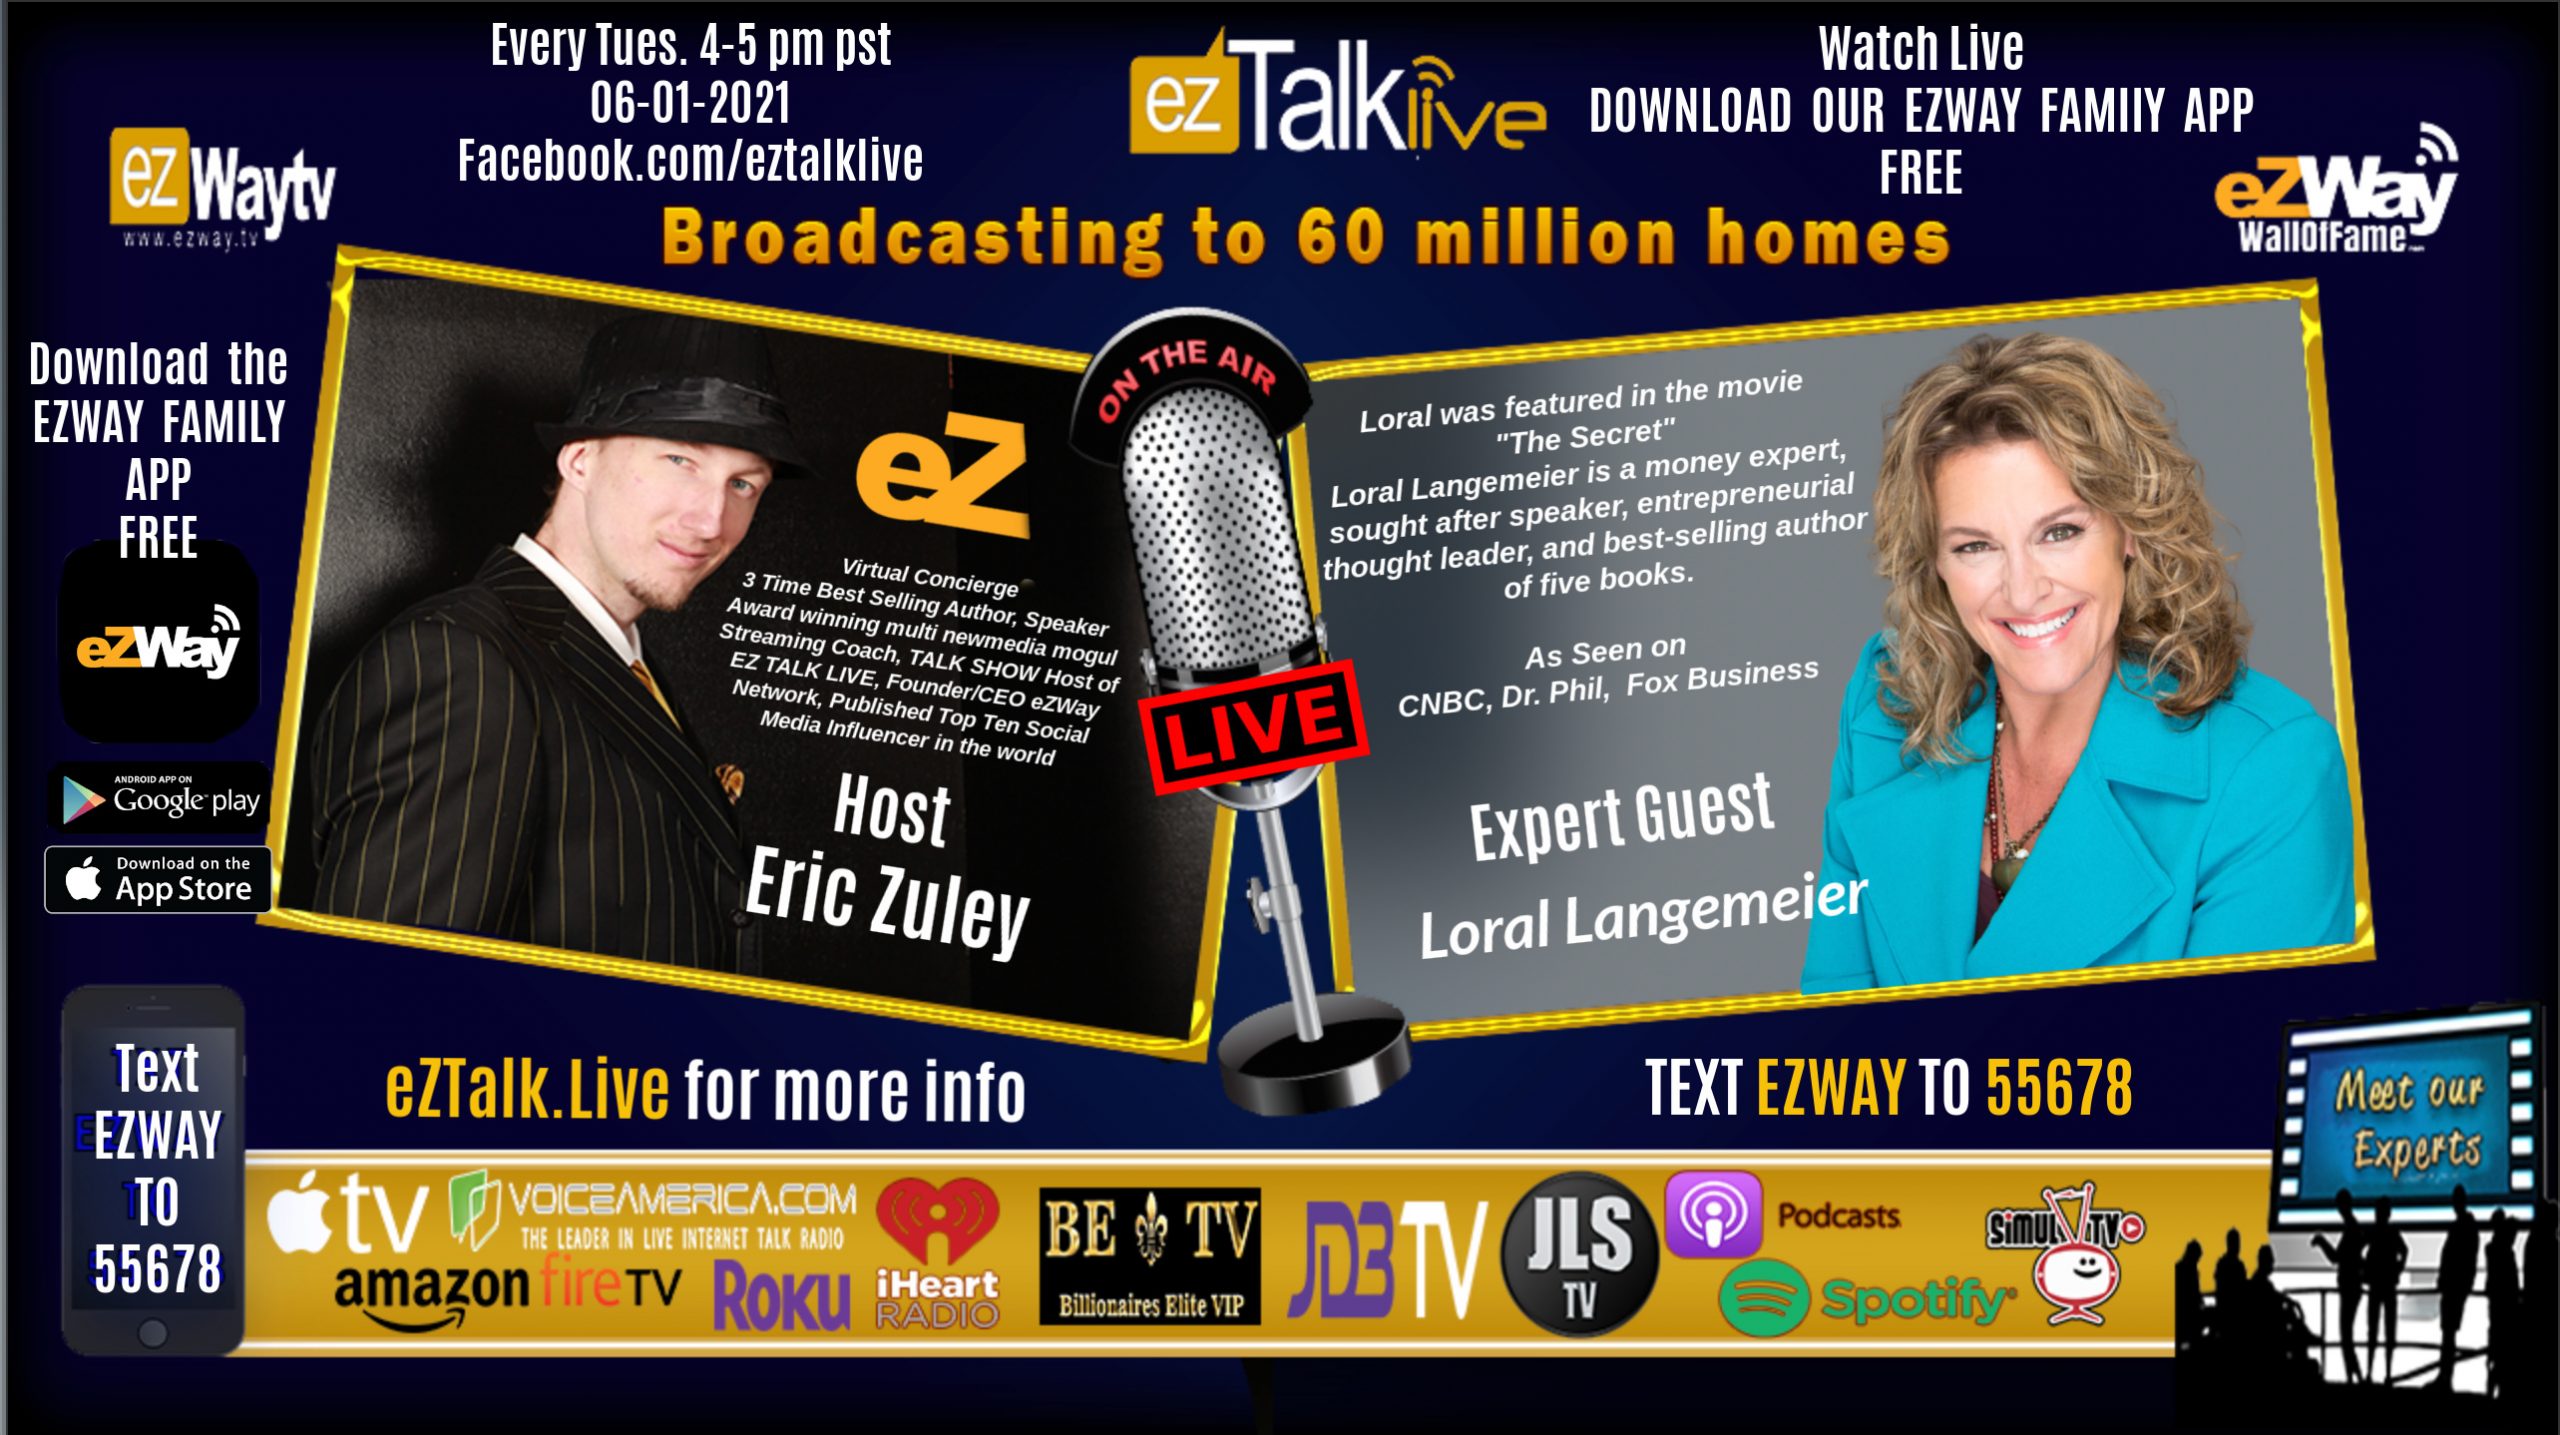 EZ TALK LIVE with Eric Zuley. Feat. Millionaire Maker from The Secret, Loral Langemeier!